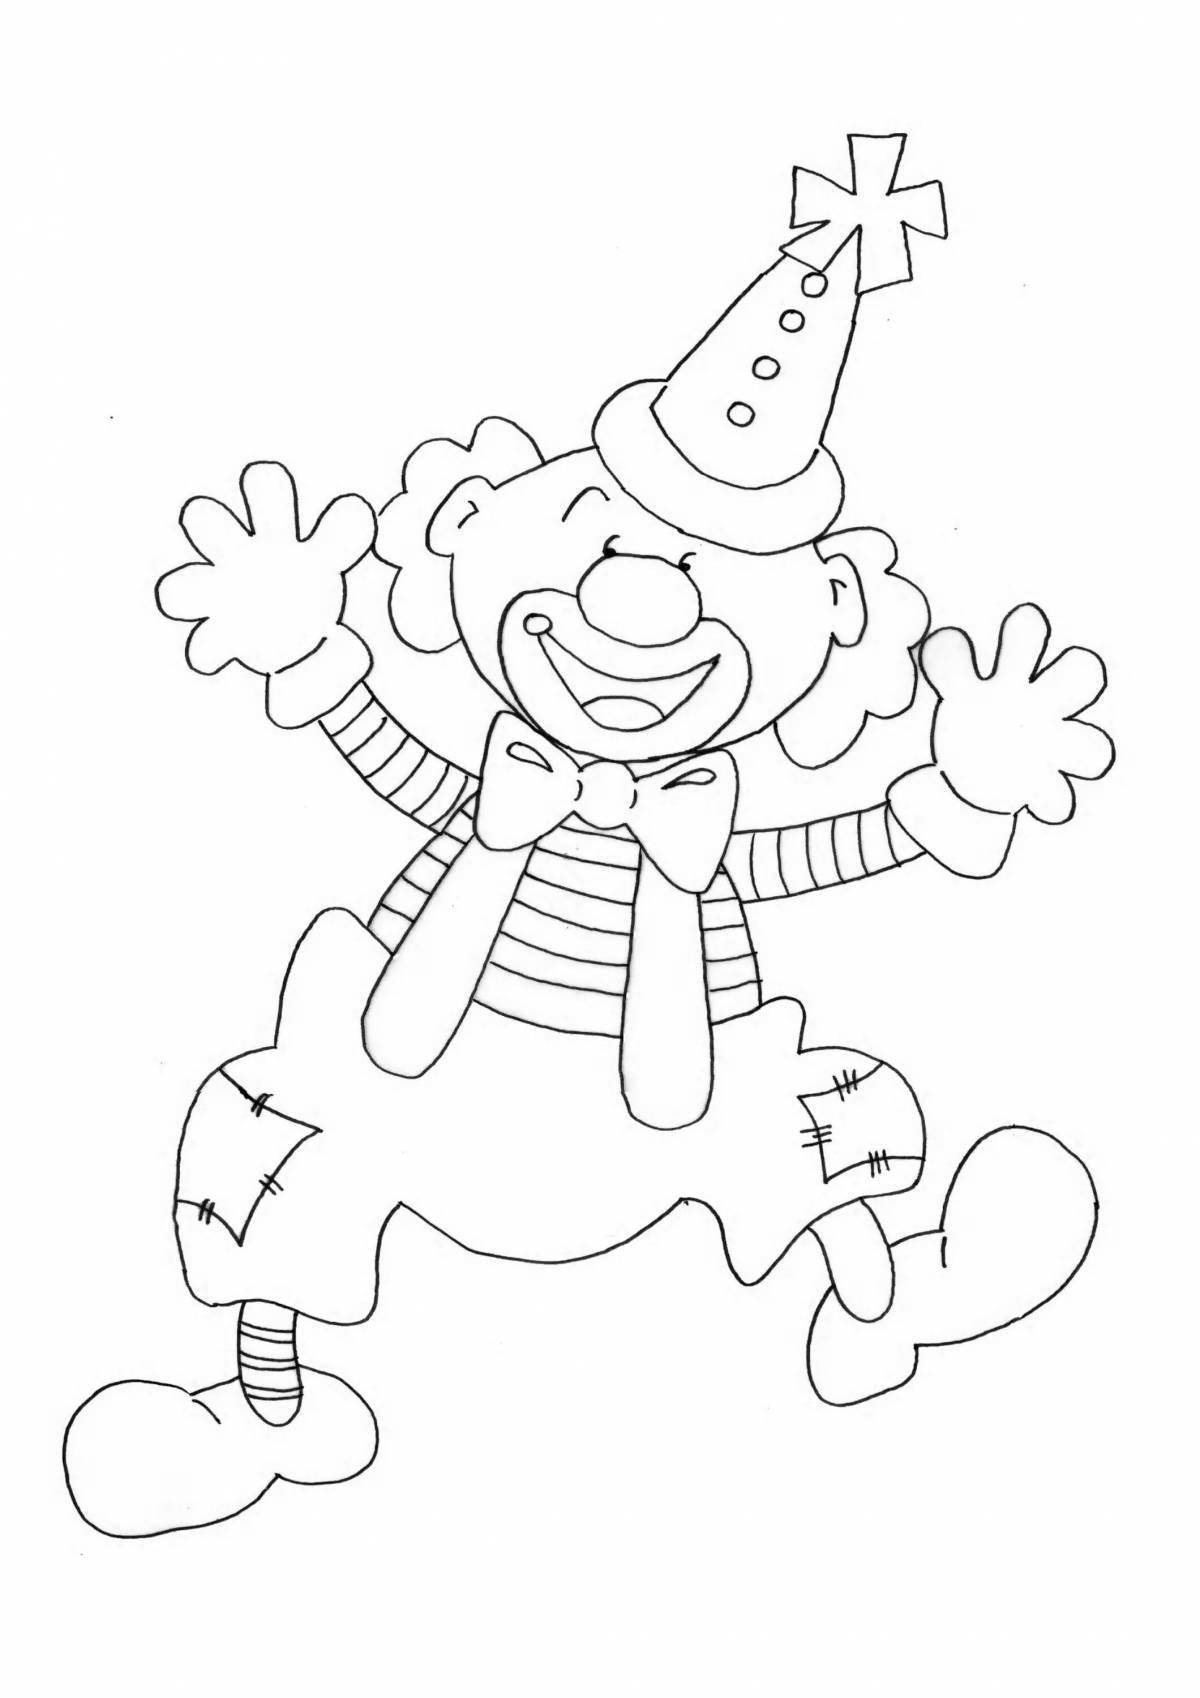 Fun clown coloring book for kids